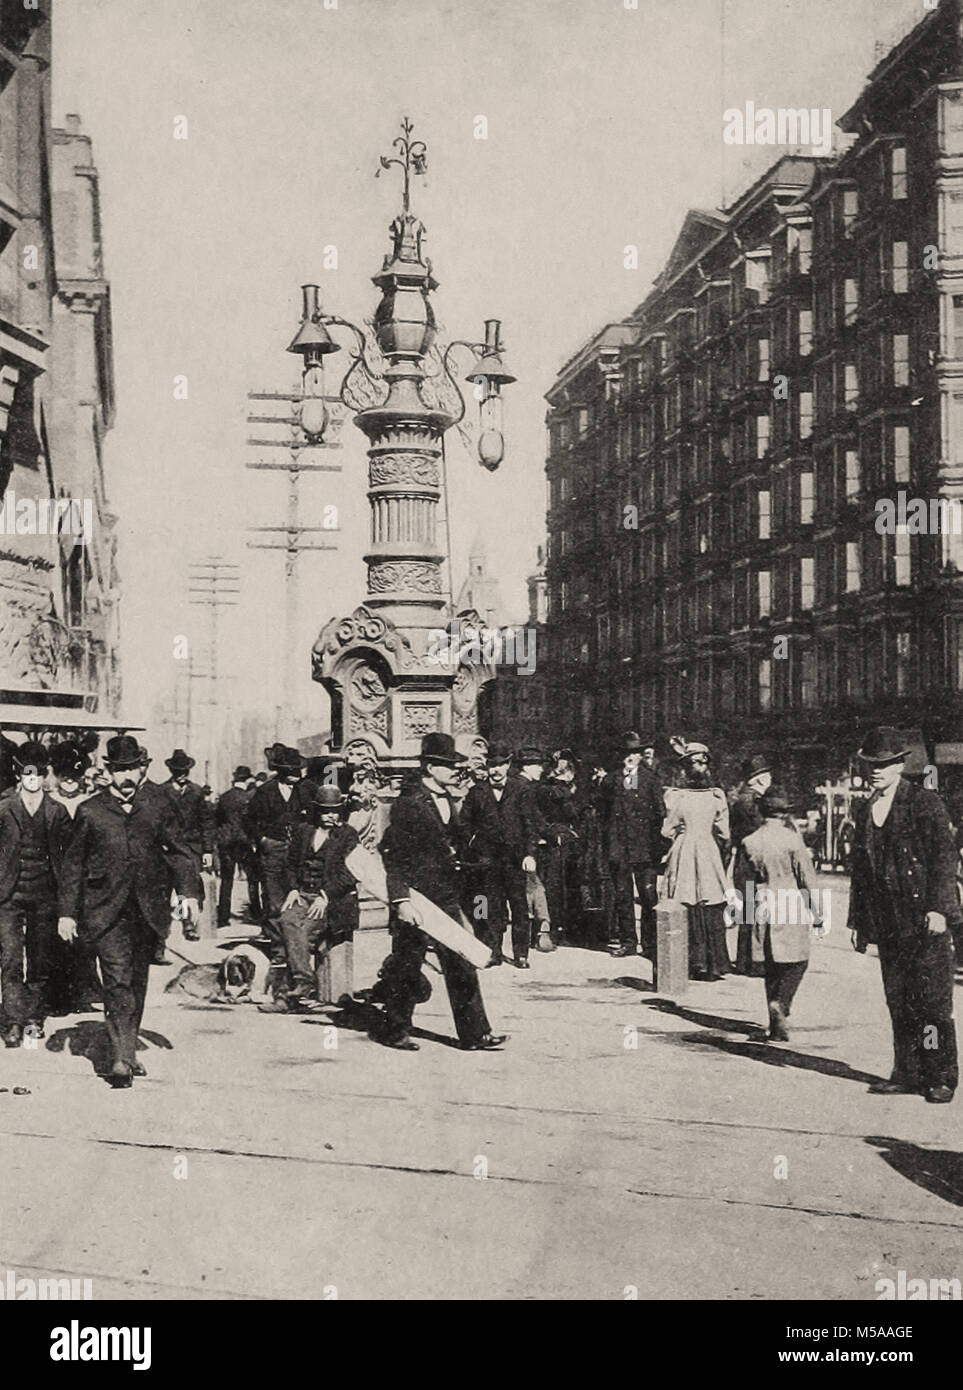 Sacco di fontana - San Francisco nel 1900 - Fotografia Vintage Foto Stock